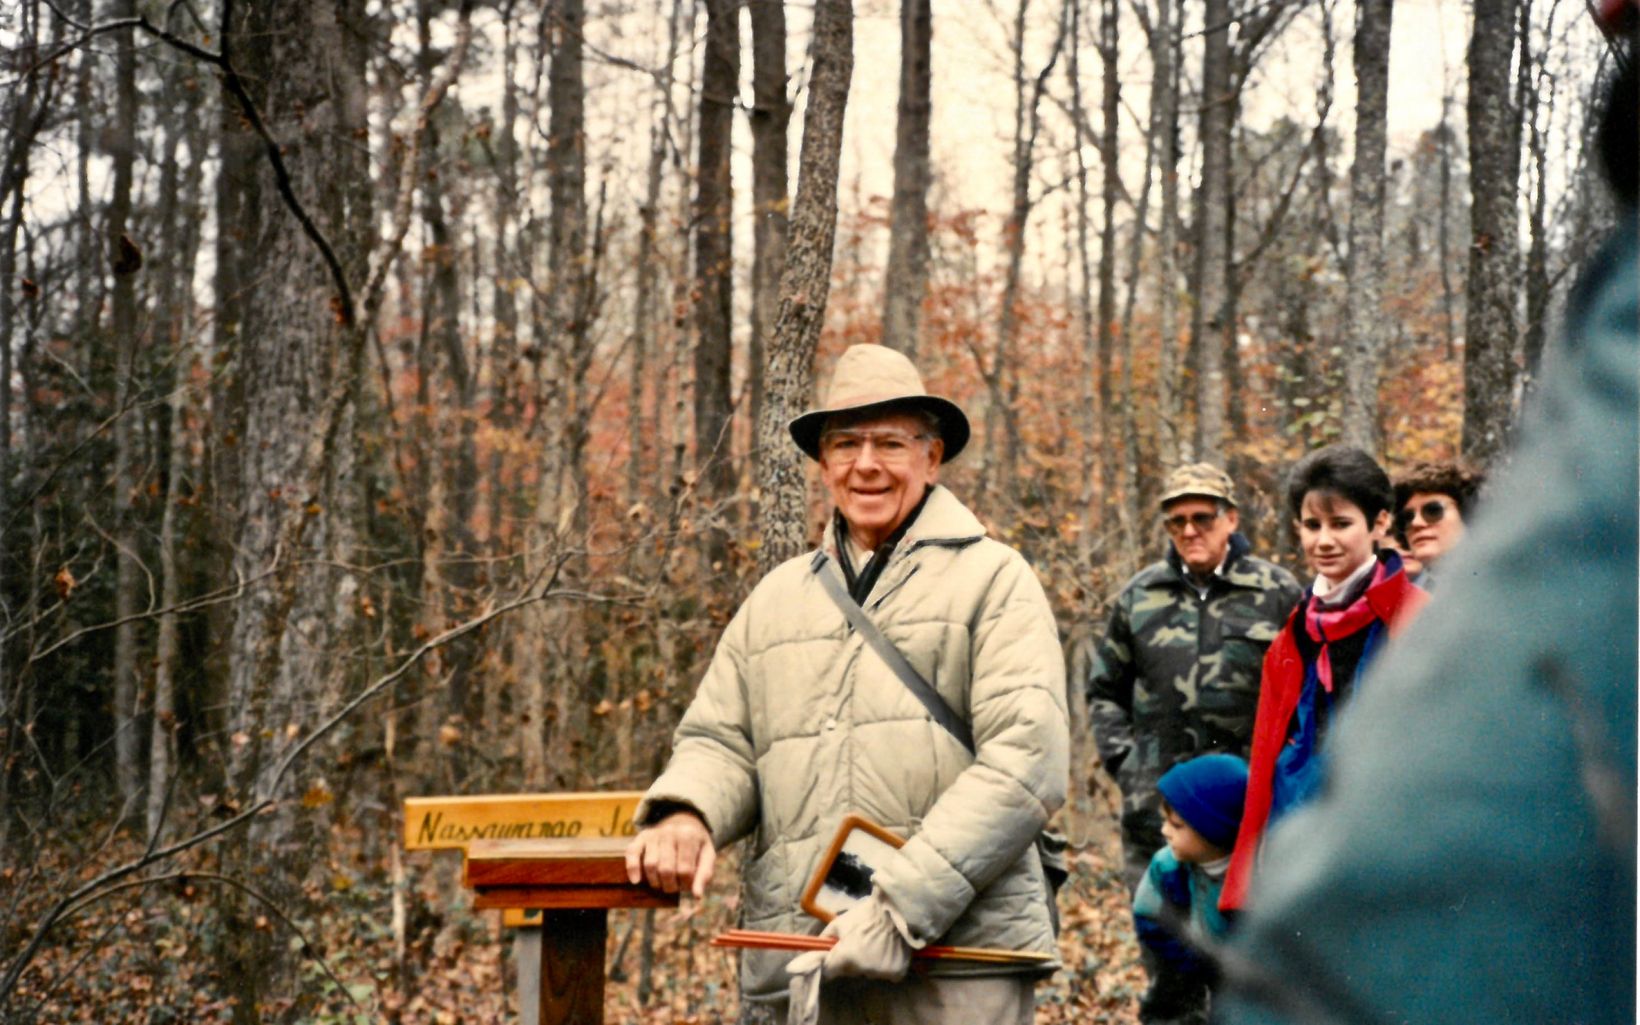 Joe Fehrer, Sr., at the dedication of the Nassawango Joe Trail, Nassawango Swamp Preserve, 1991.